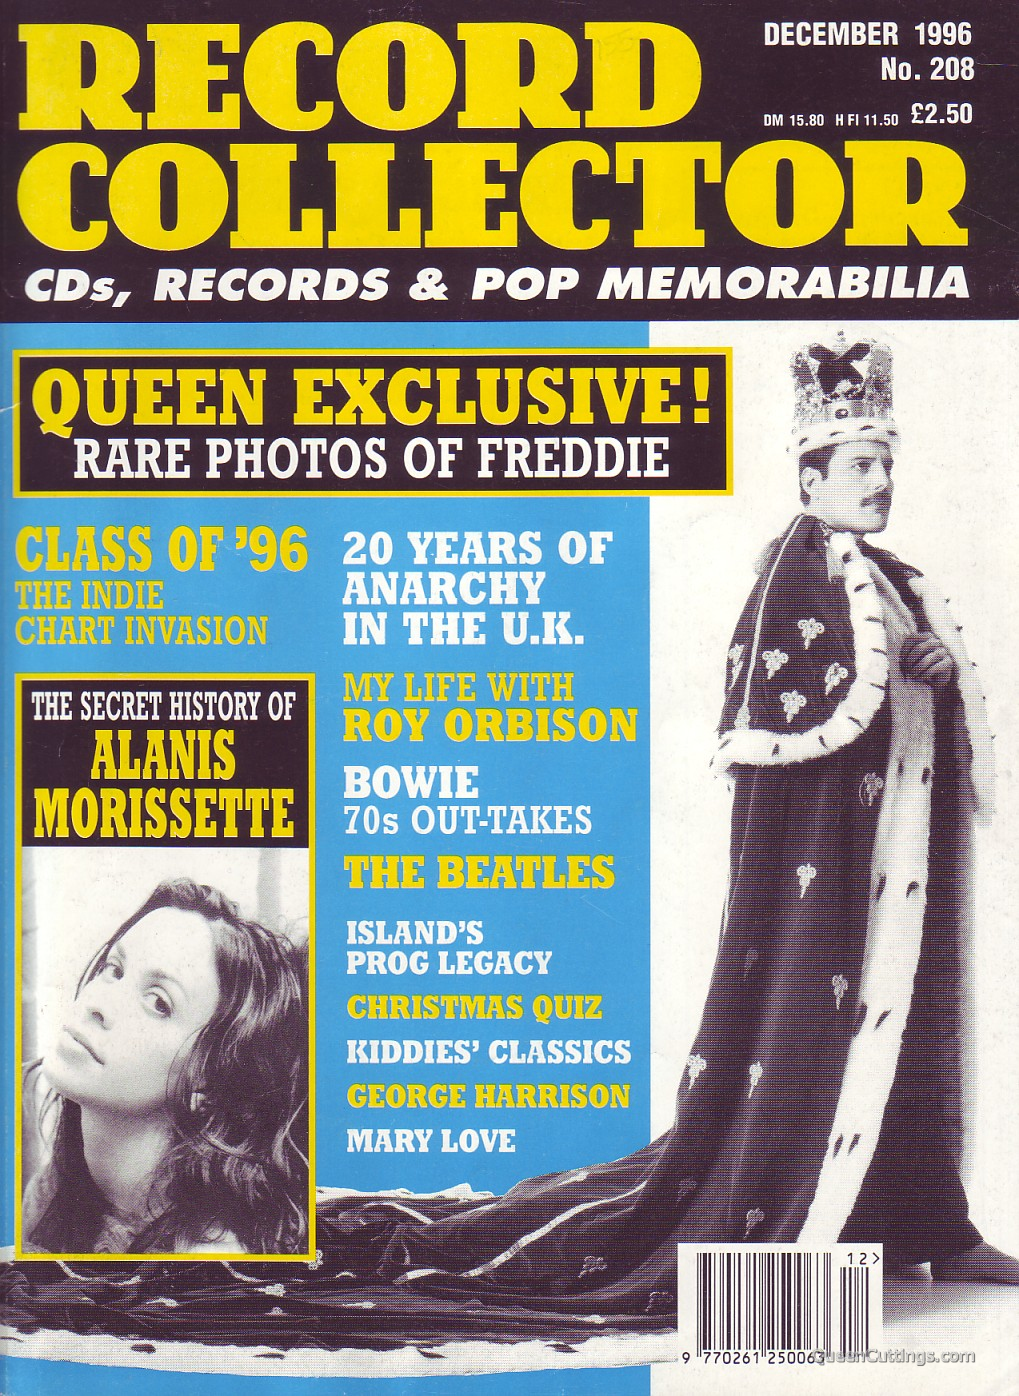 [1996+Record+Collector.jpg]